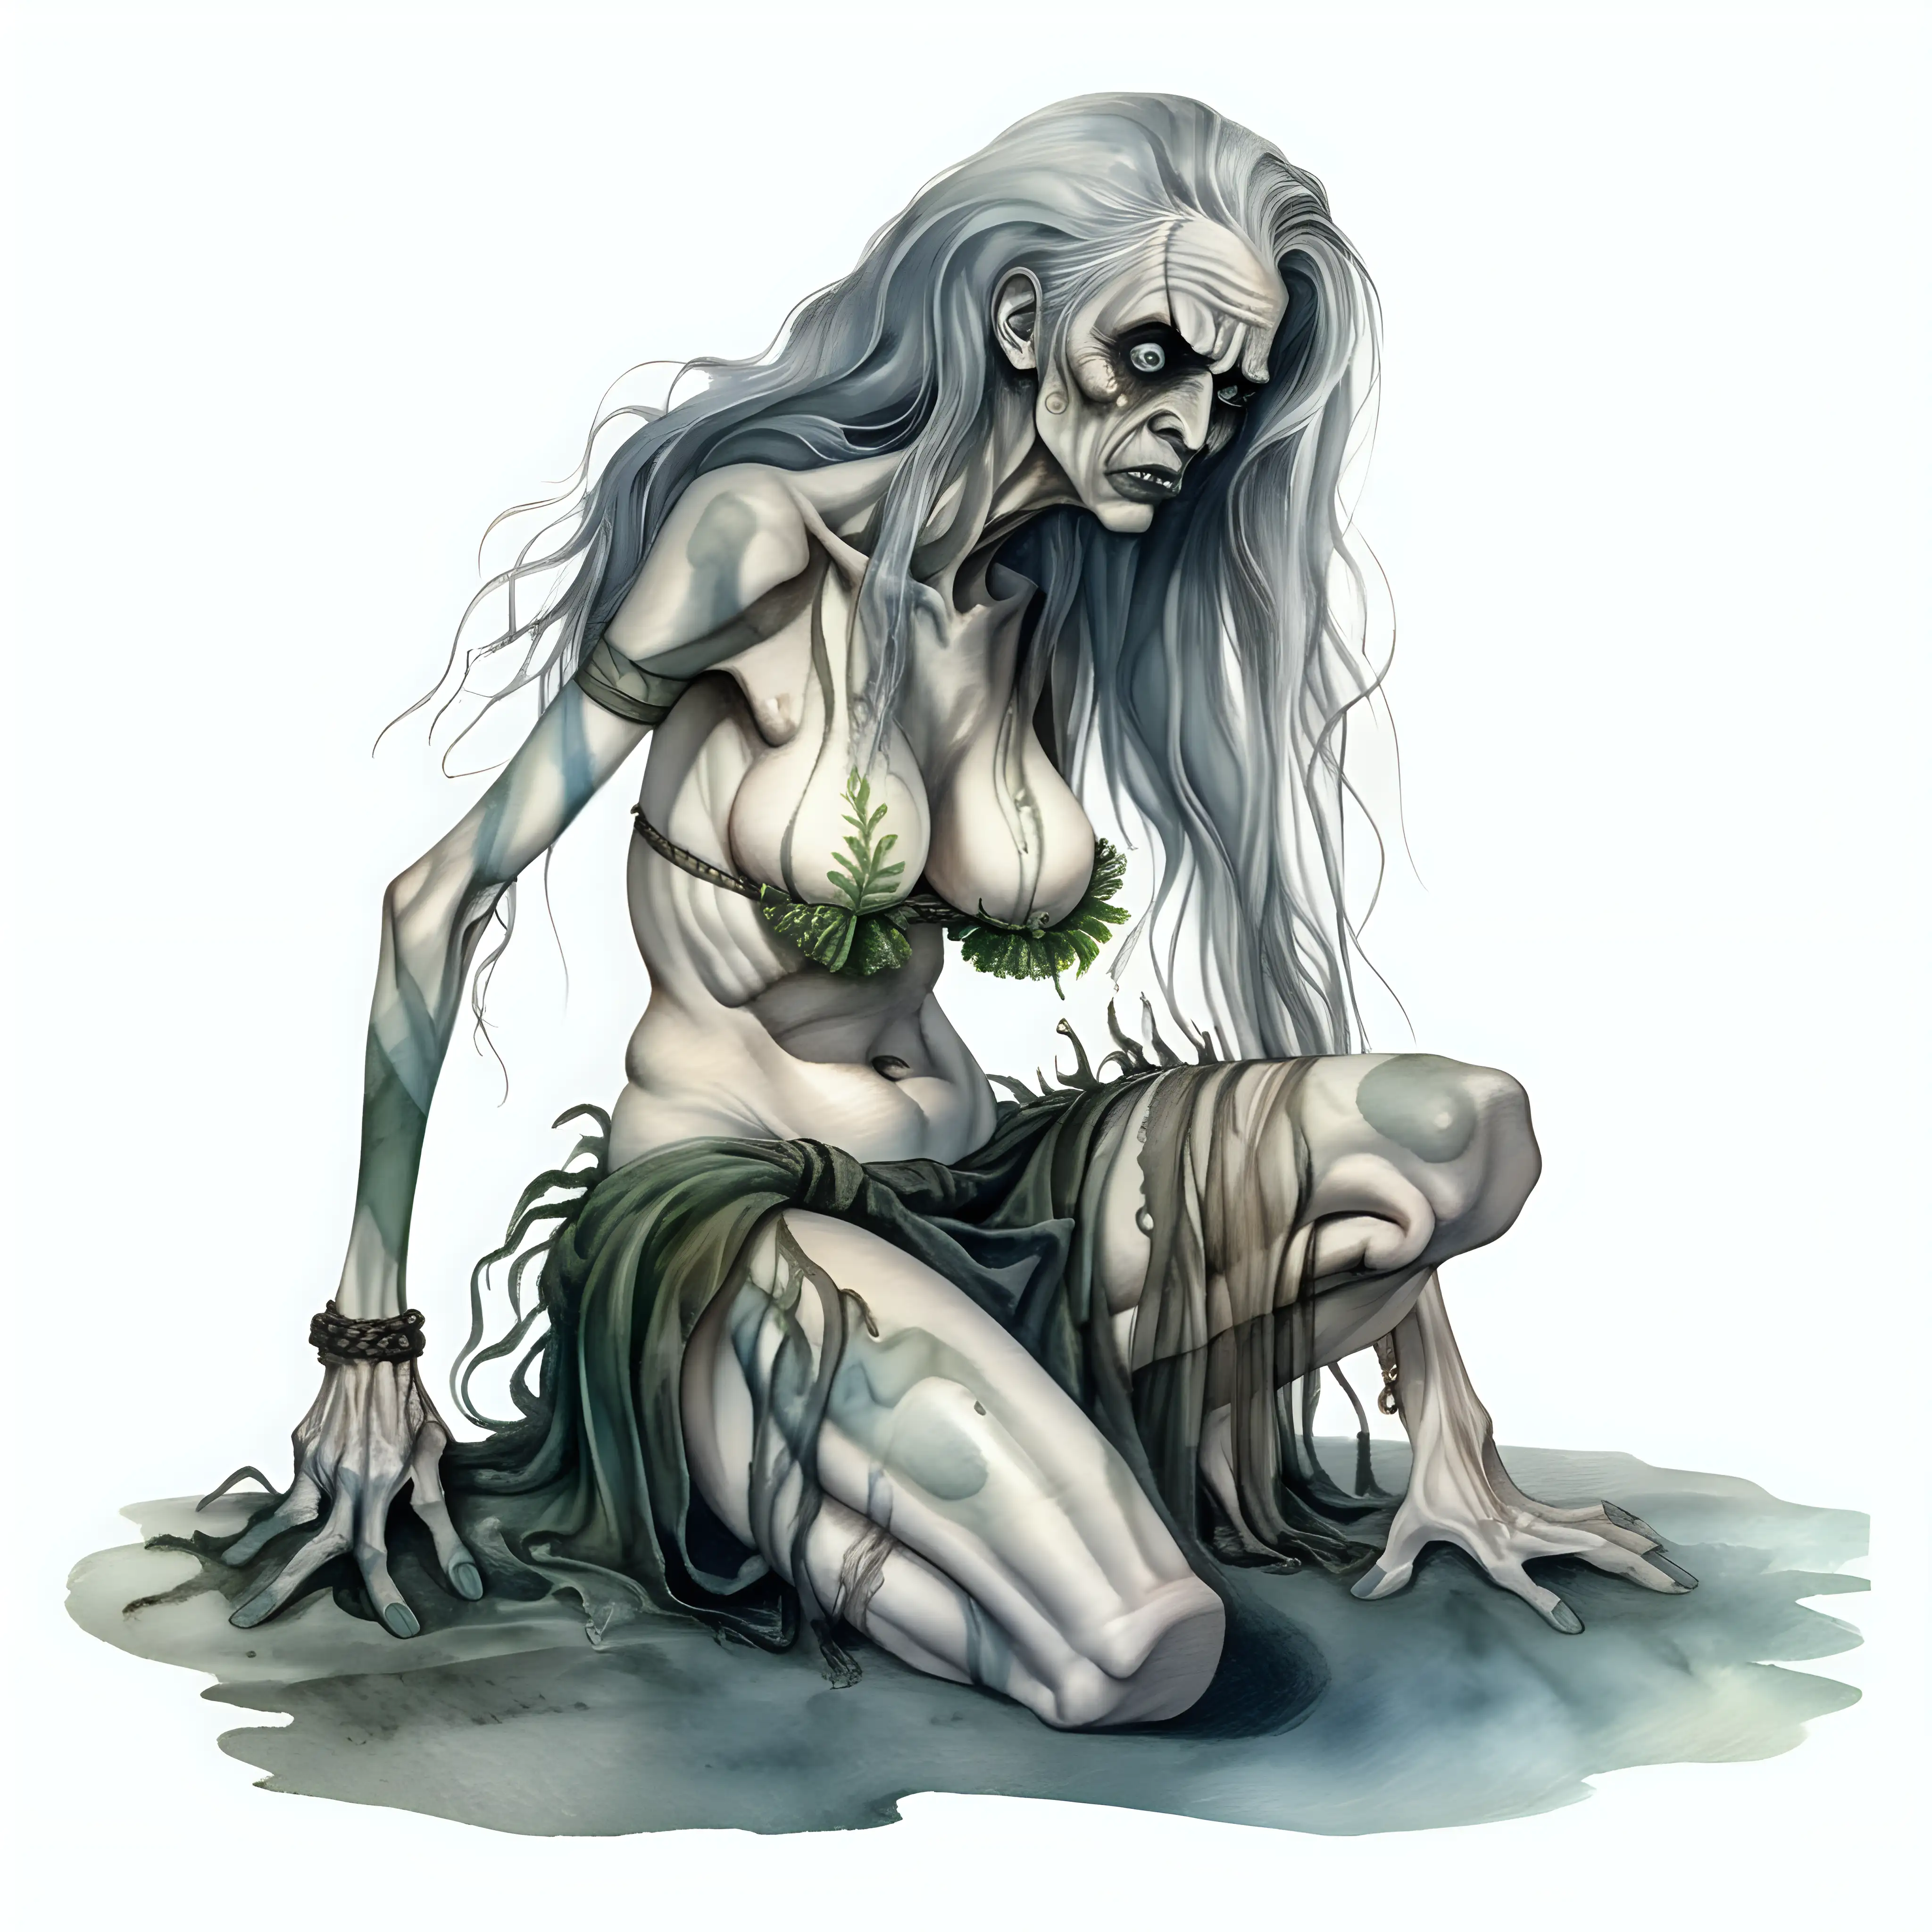 kneeling ugly decaying evil sea hag wearing seaweed loin cloth and bra, dark watercolor drawing, no background